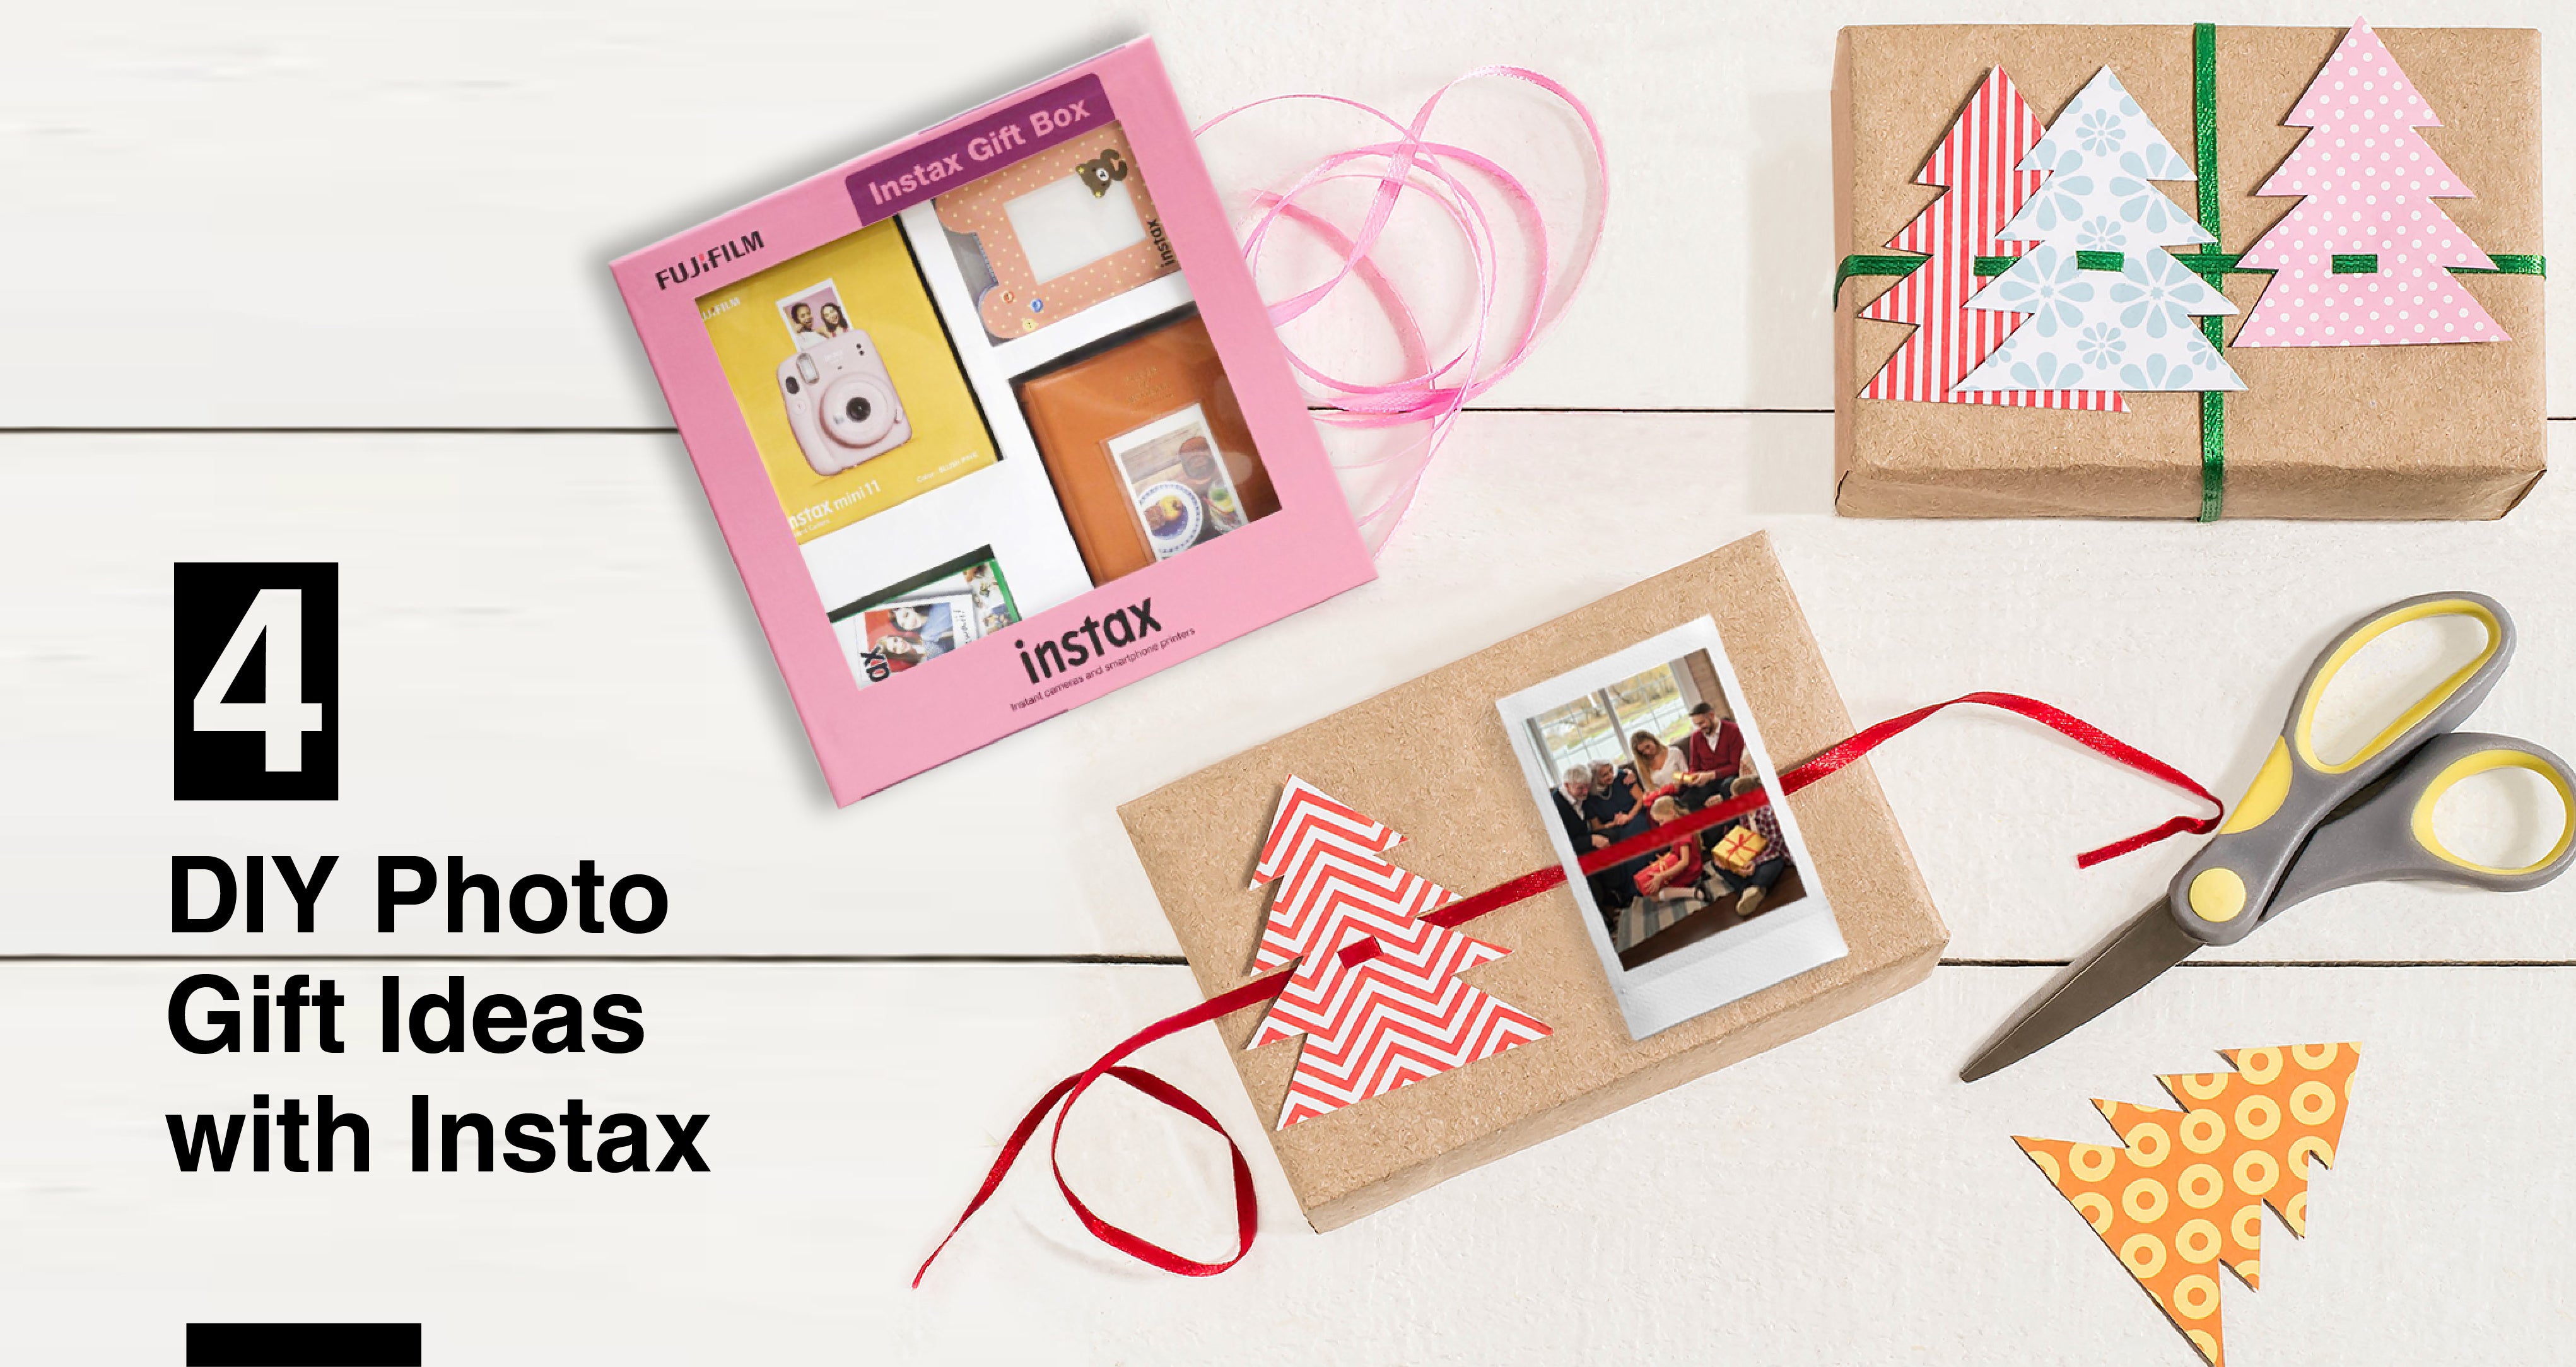 Buy Chocolate Explosion Box | Birthday Gift Ideas | Everlasting Memories